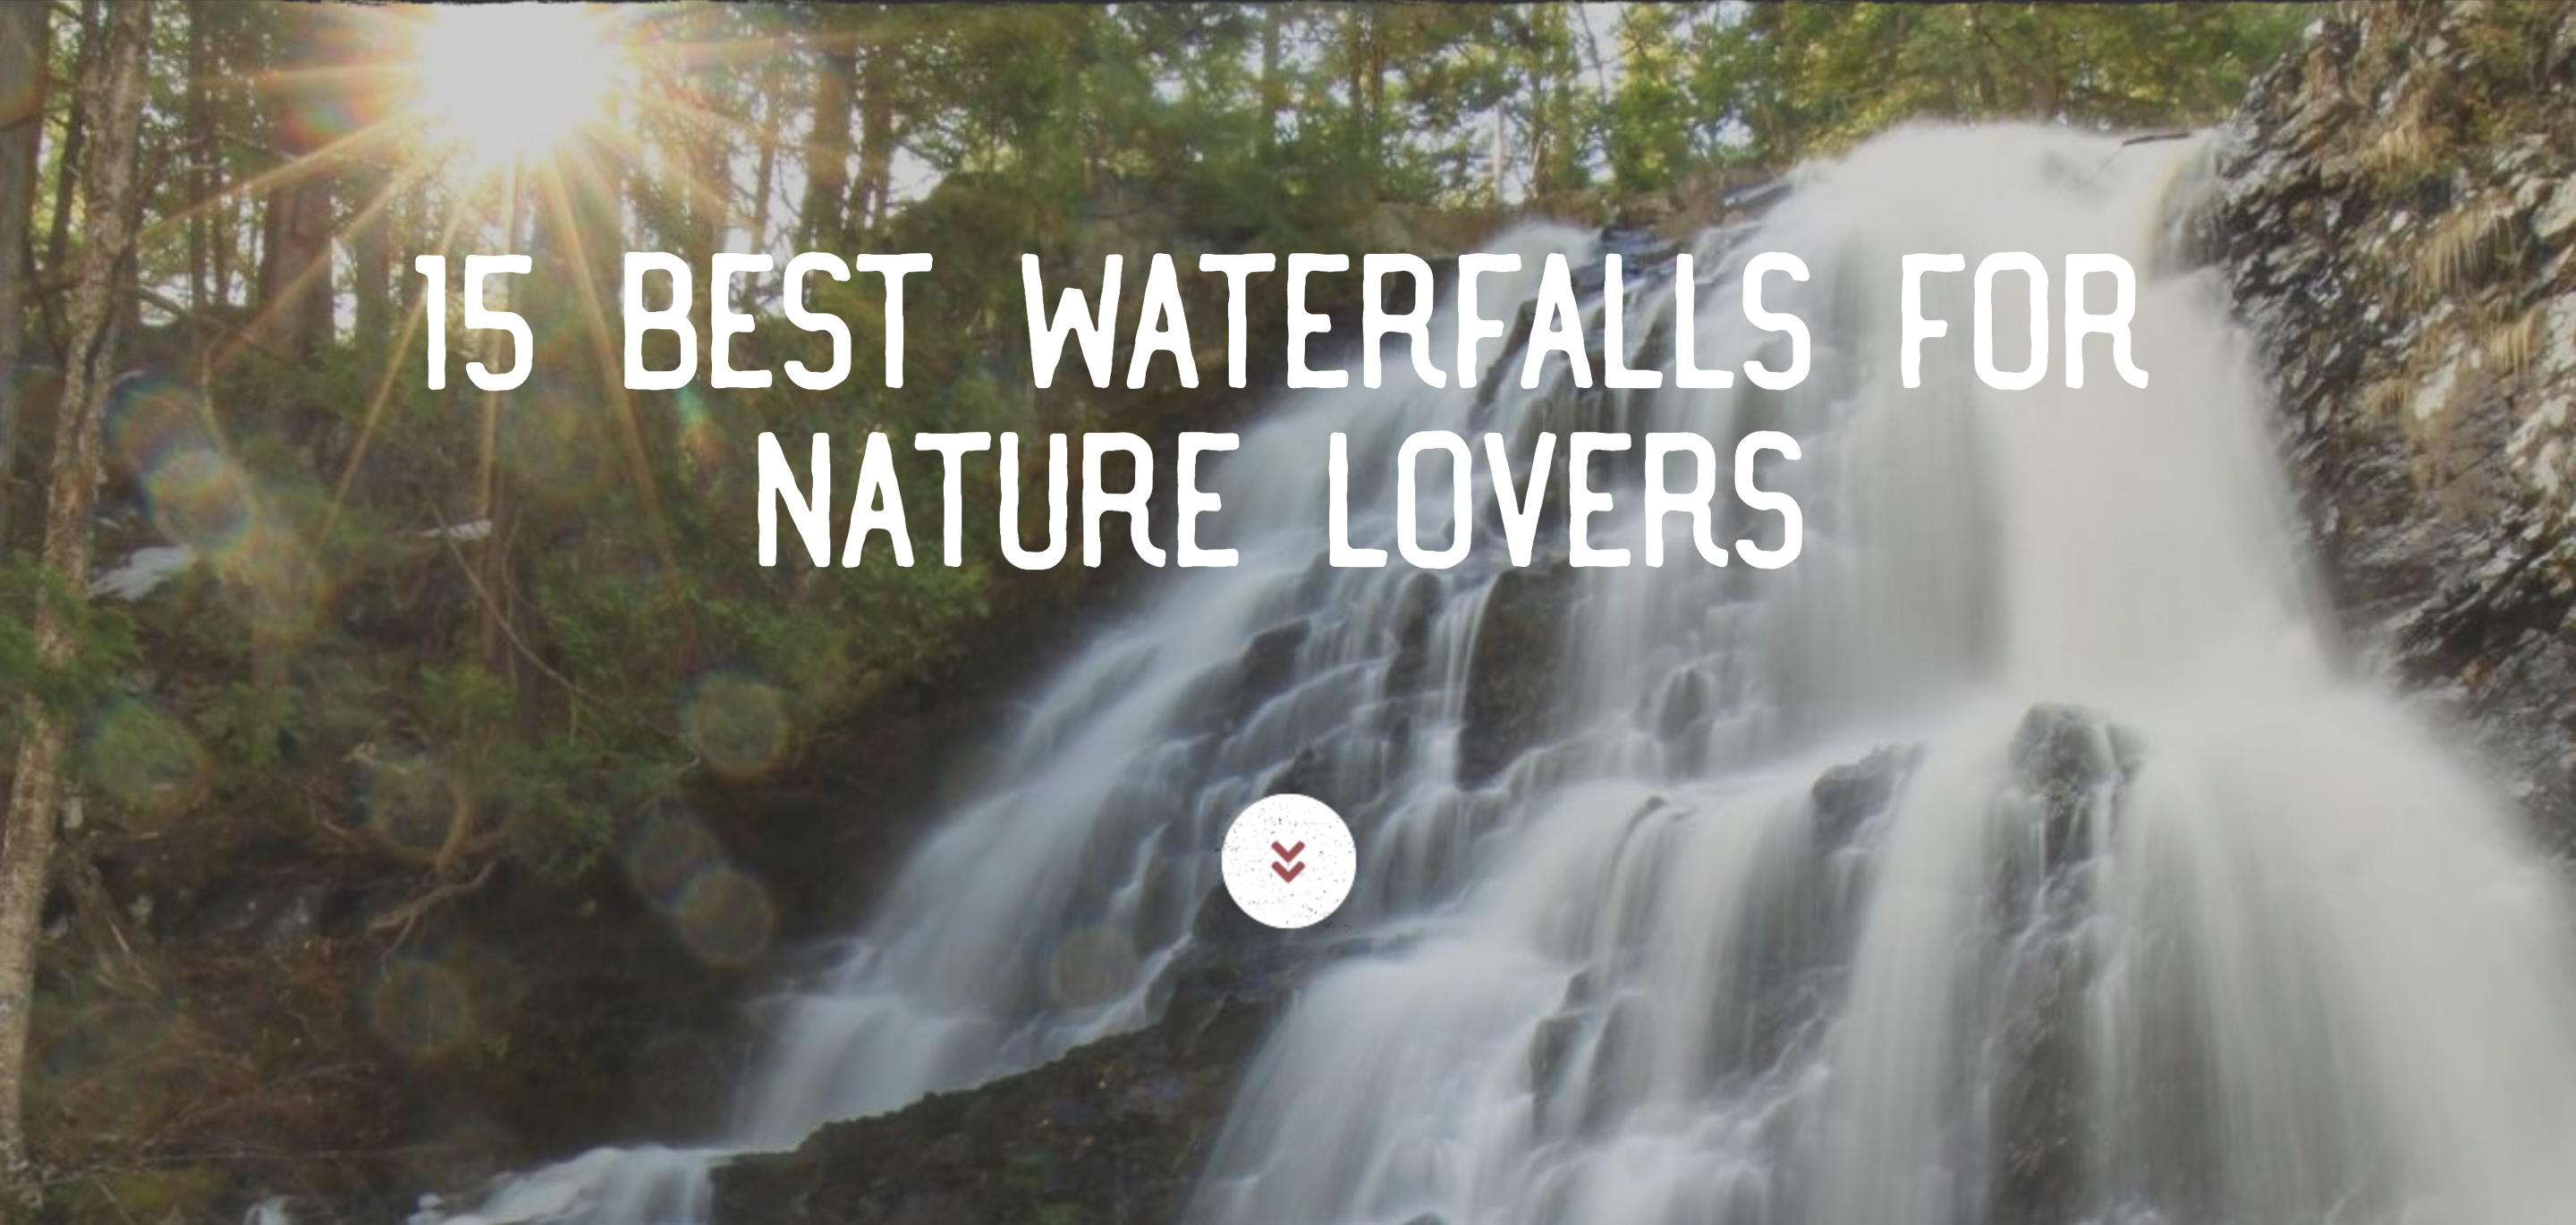 Top 15 Waterfalls Blog Post